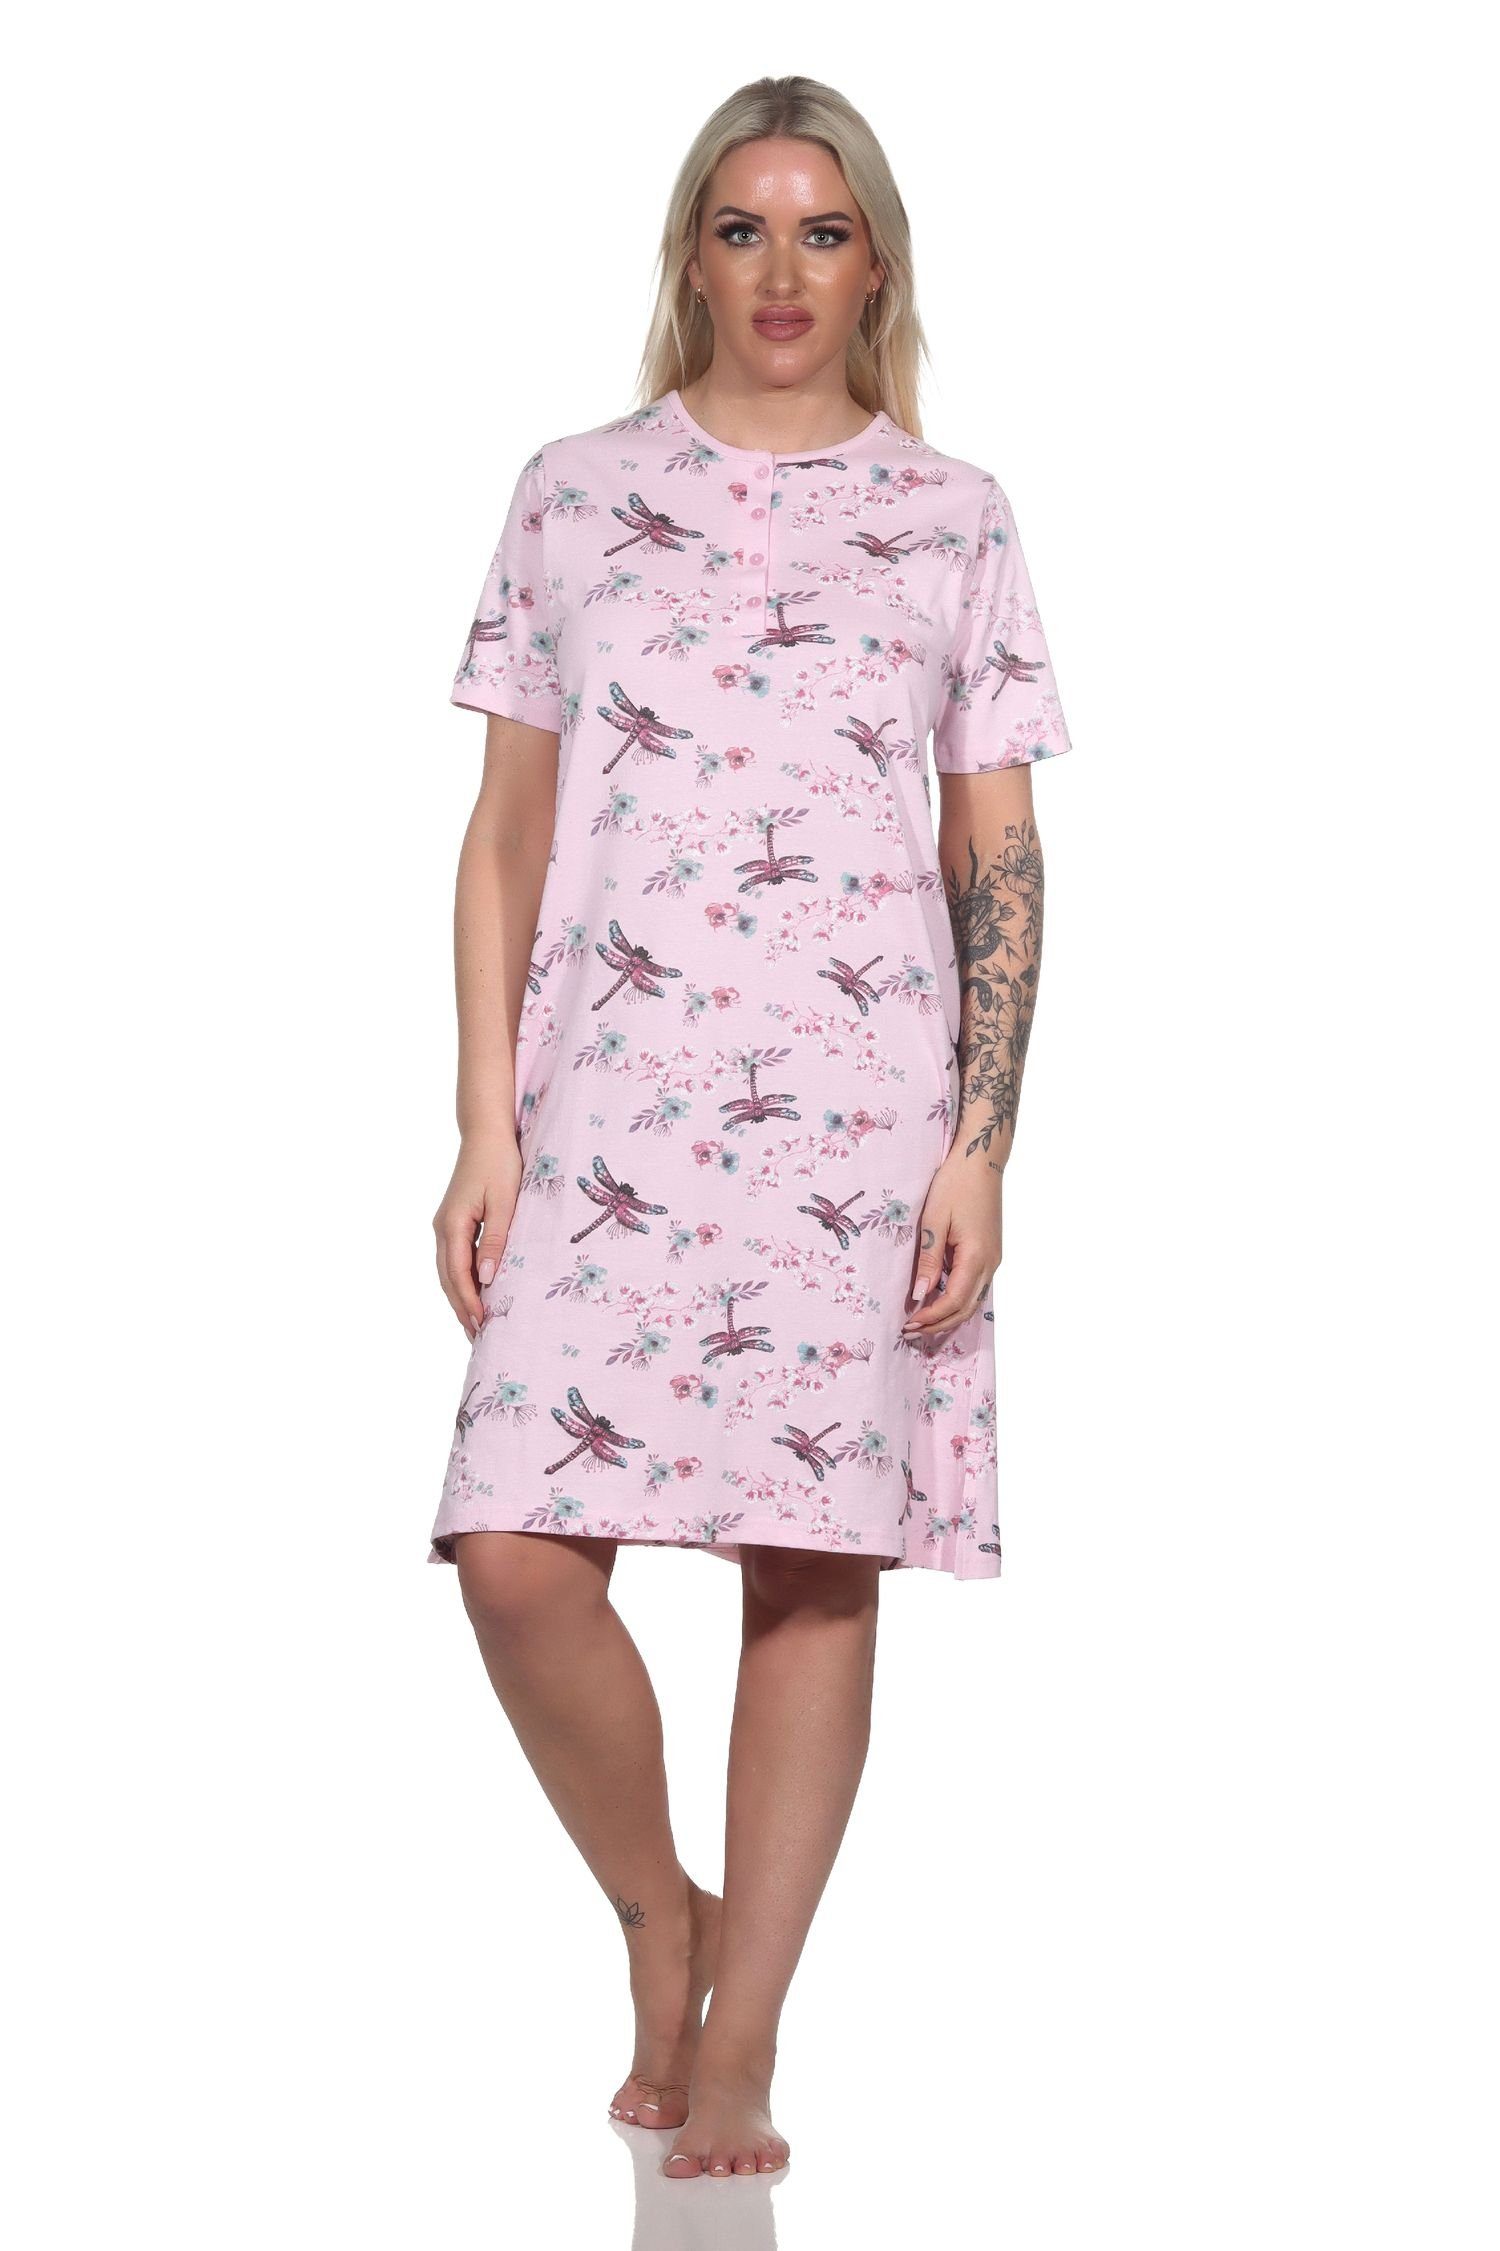 Normann Nachthemd und Alloverprint Hals am Nachthemd kurzarm Knopfleiste rosa floraler Damen